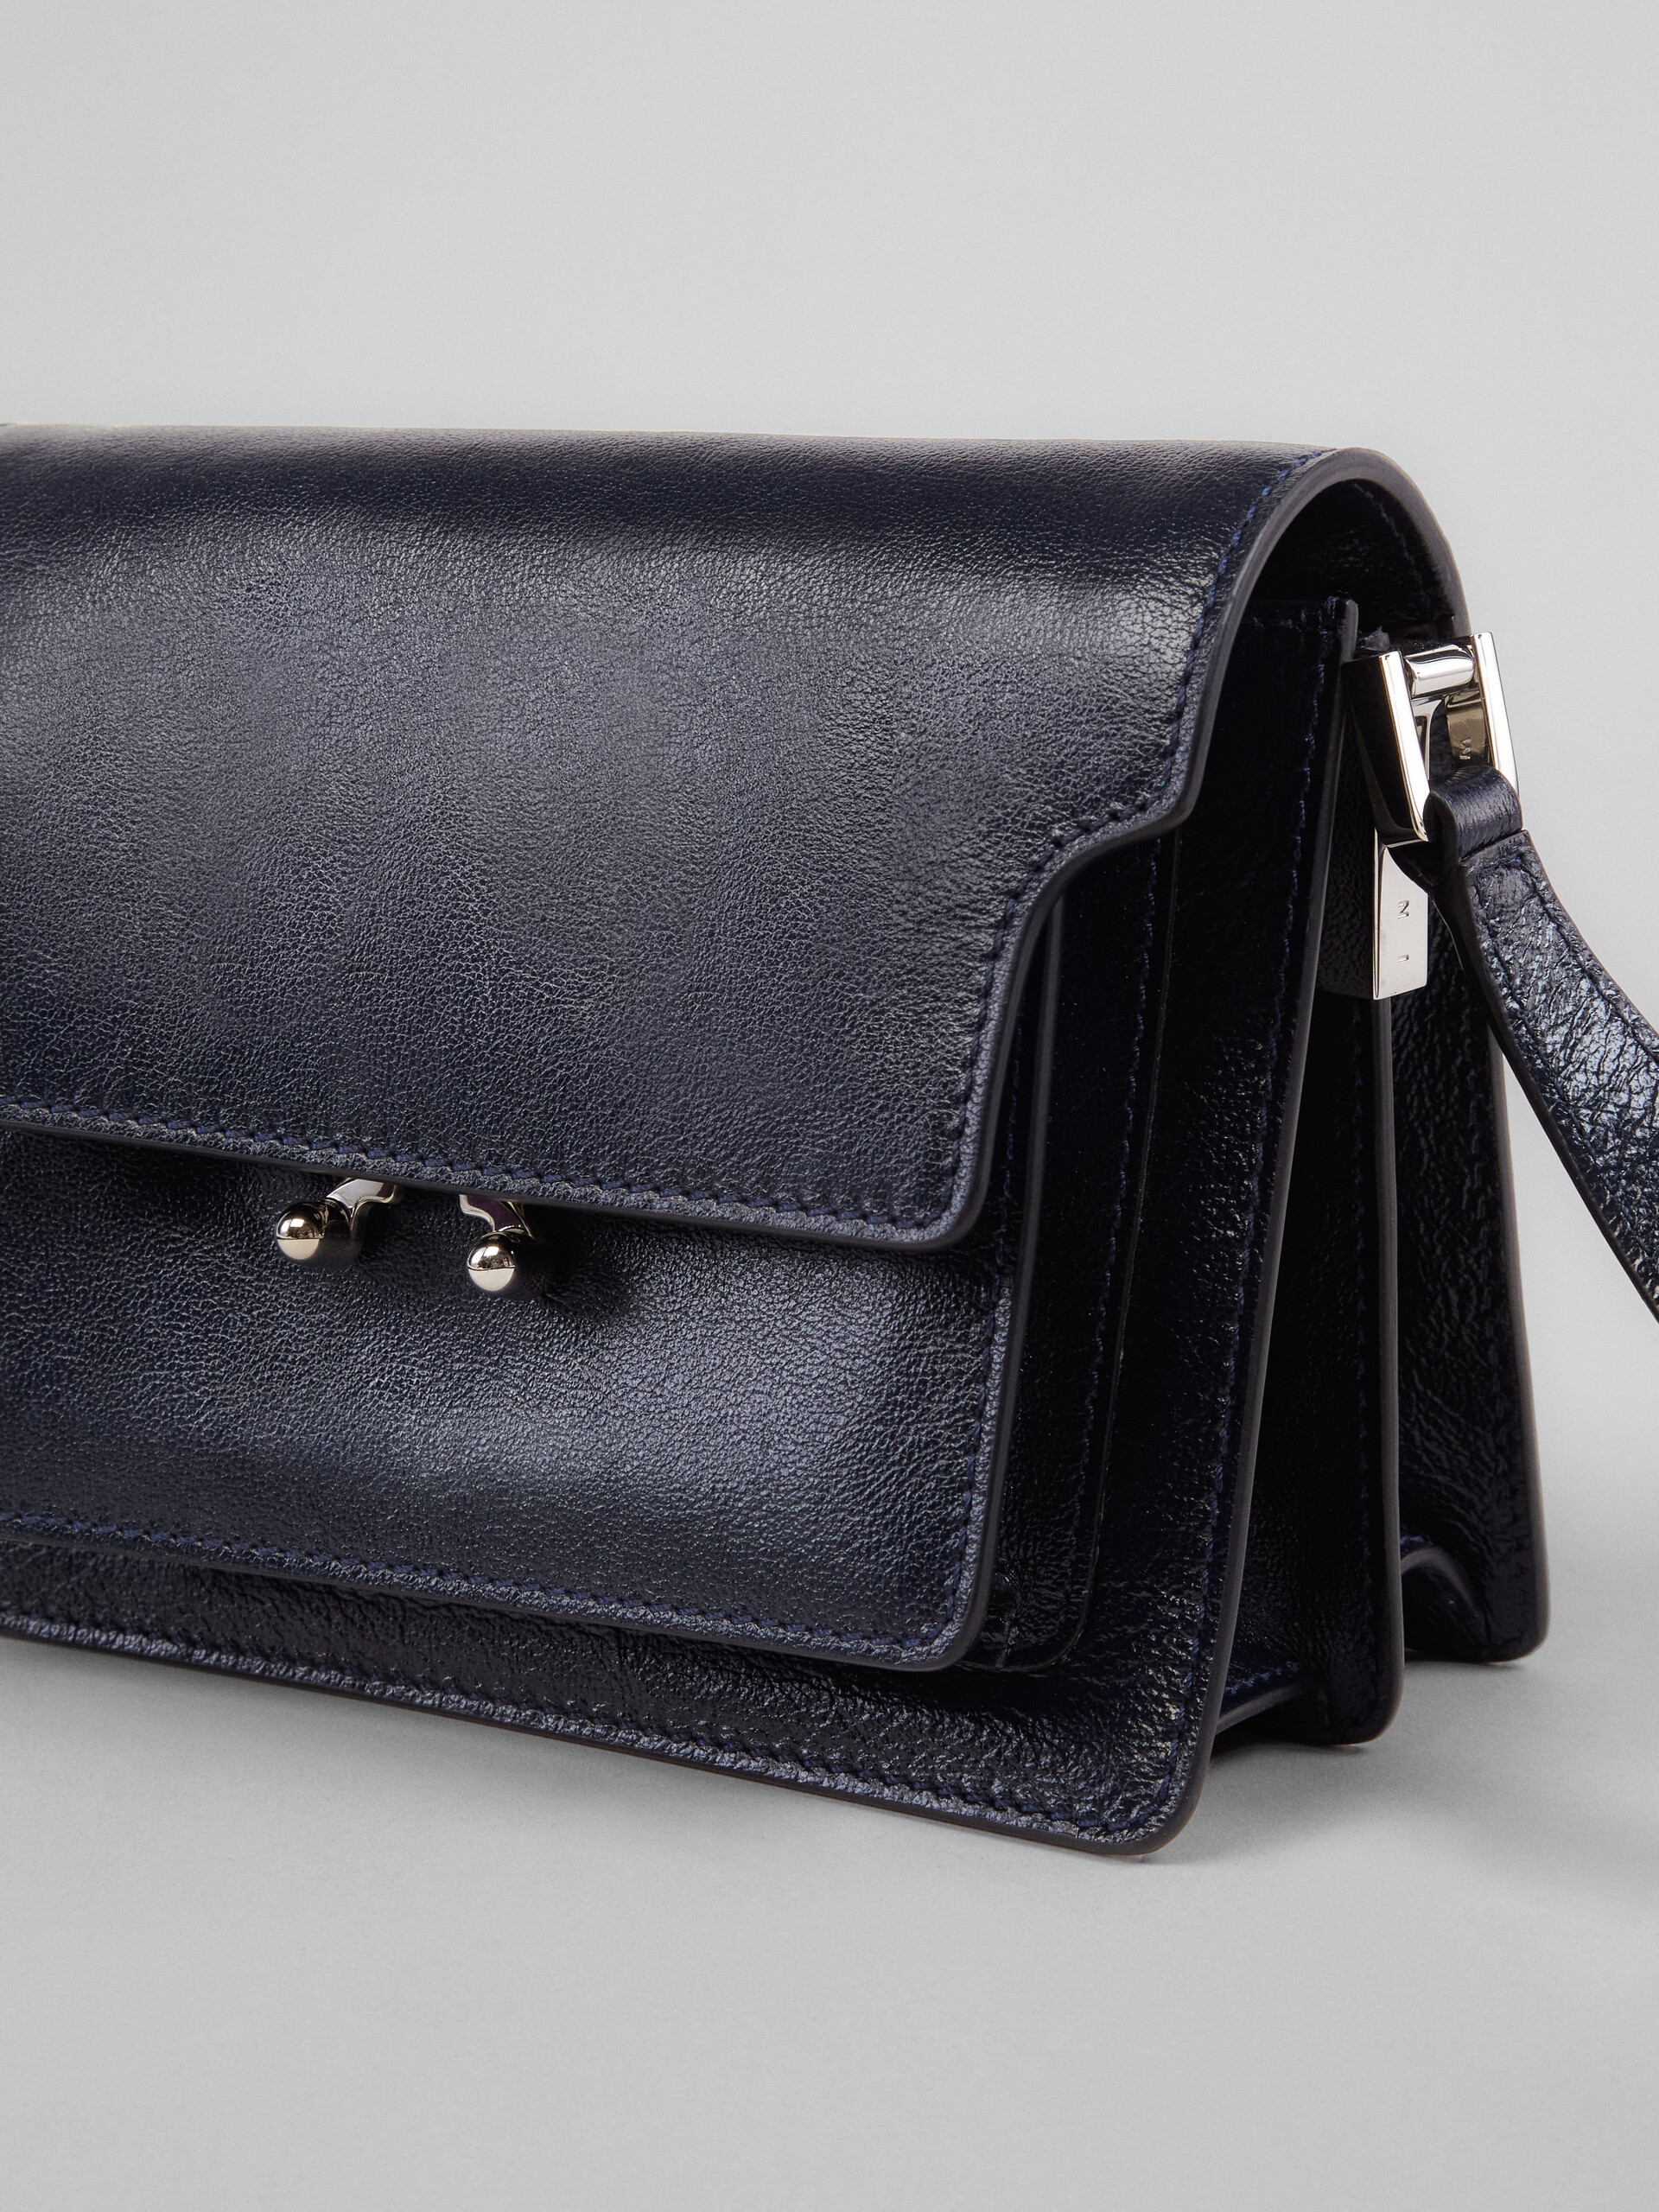 TRUNK SOFT bag mini in pelle blu - Borse a spalla - Image 3